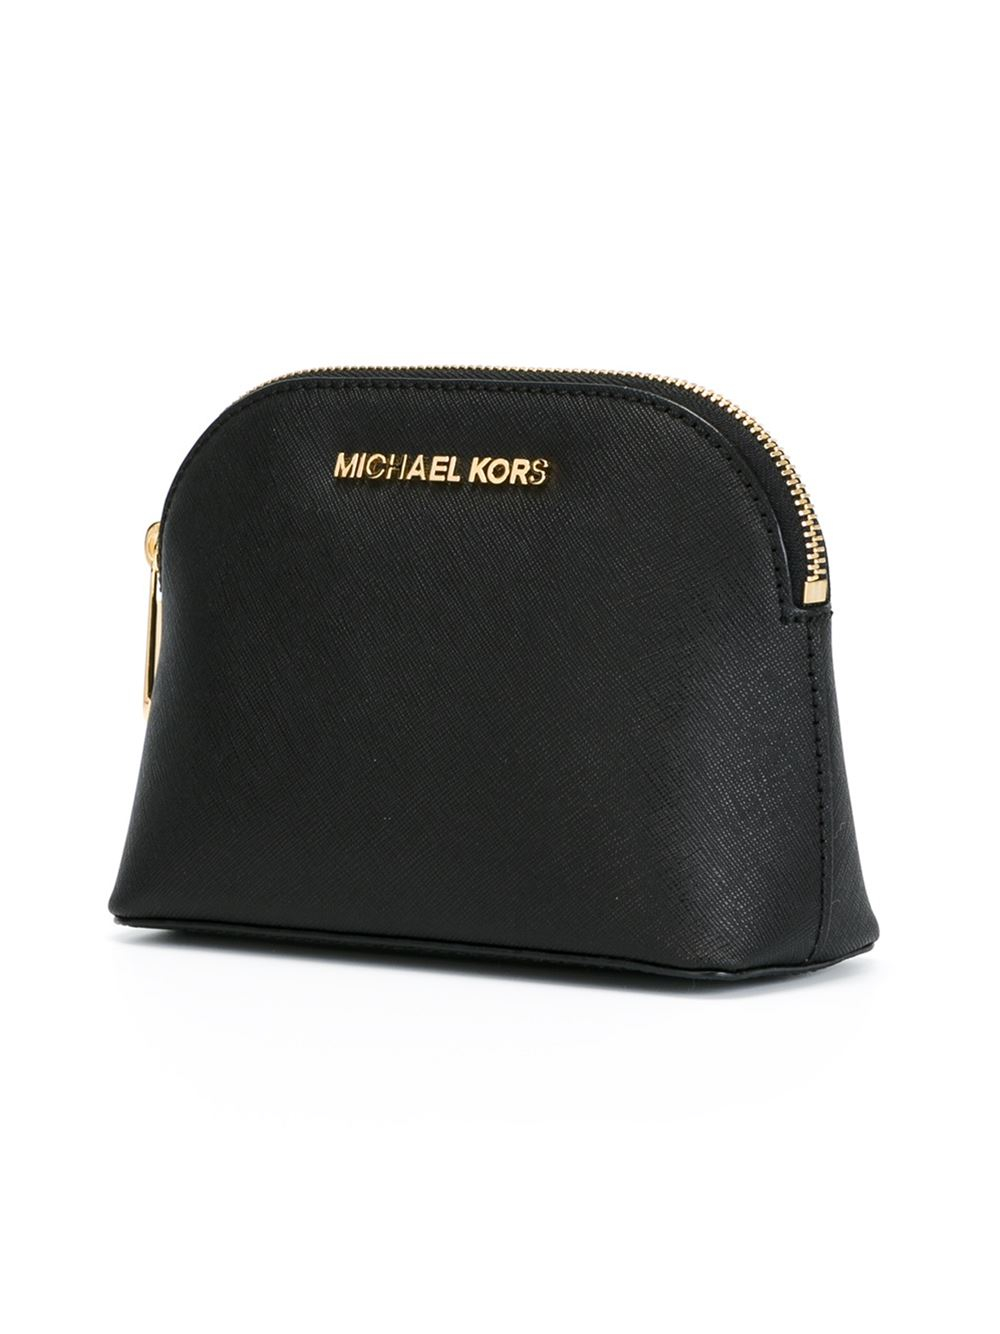 michael kors black makeup bag